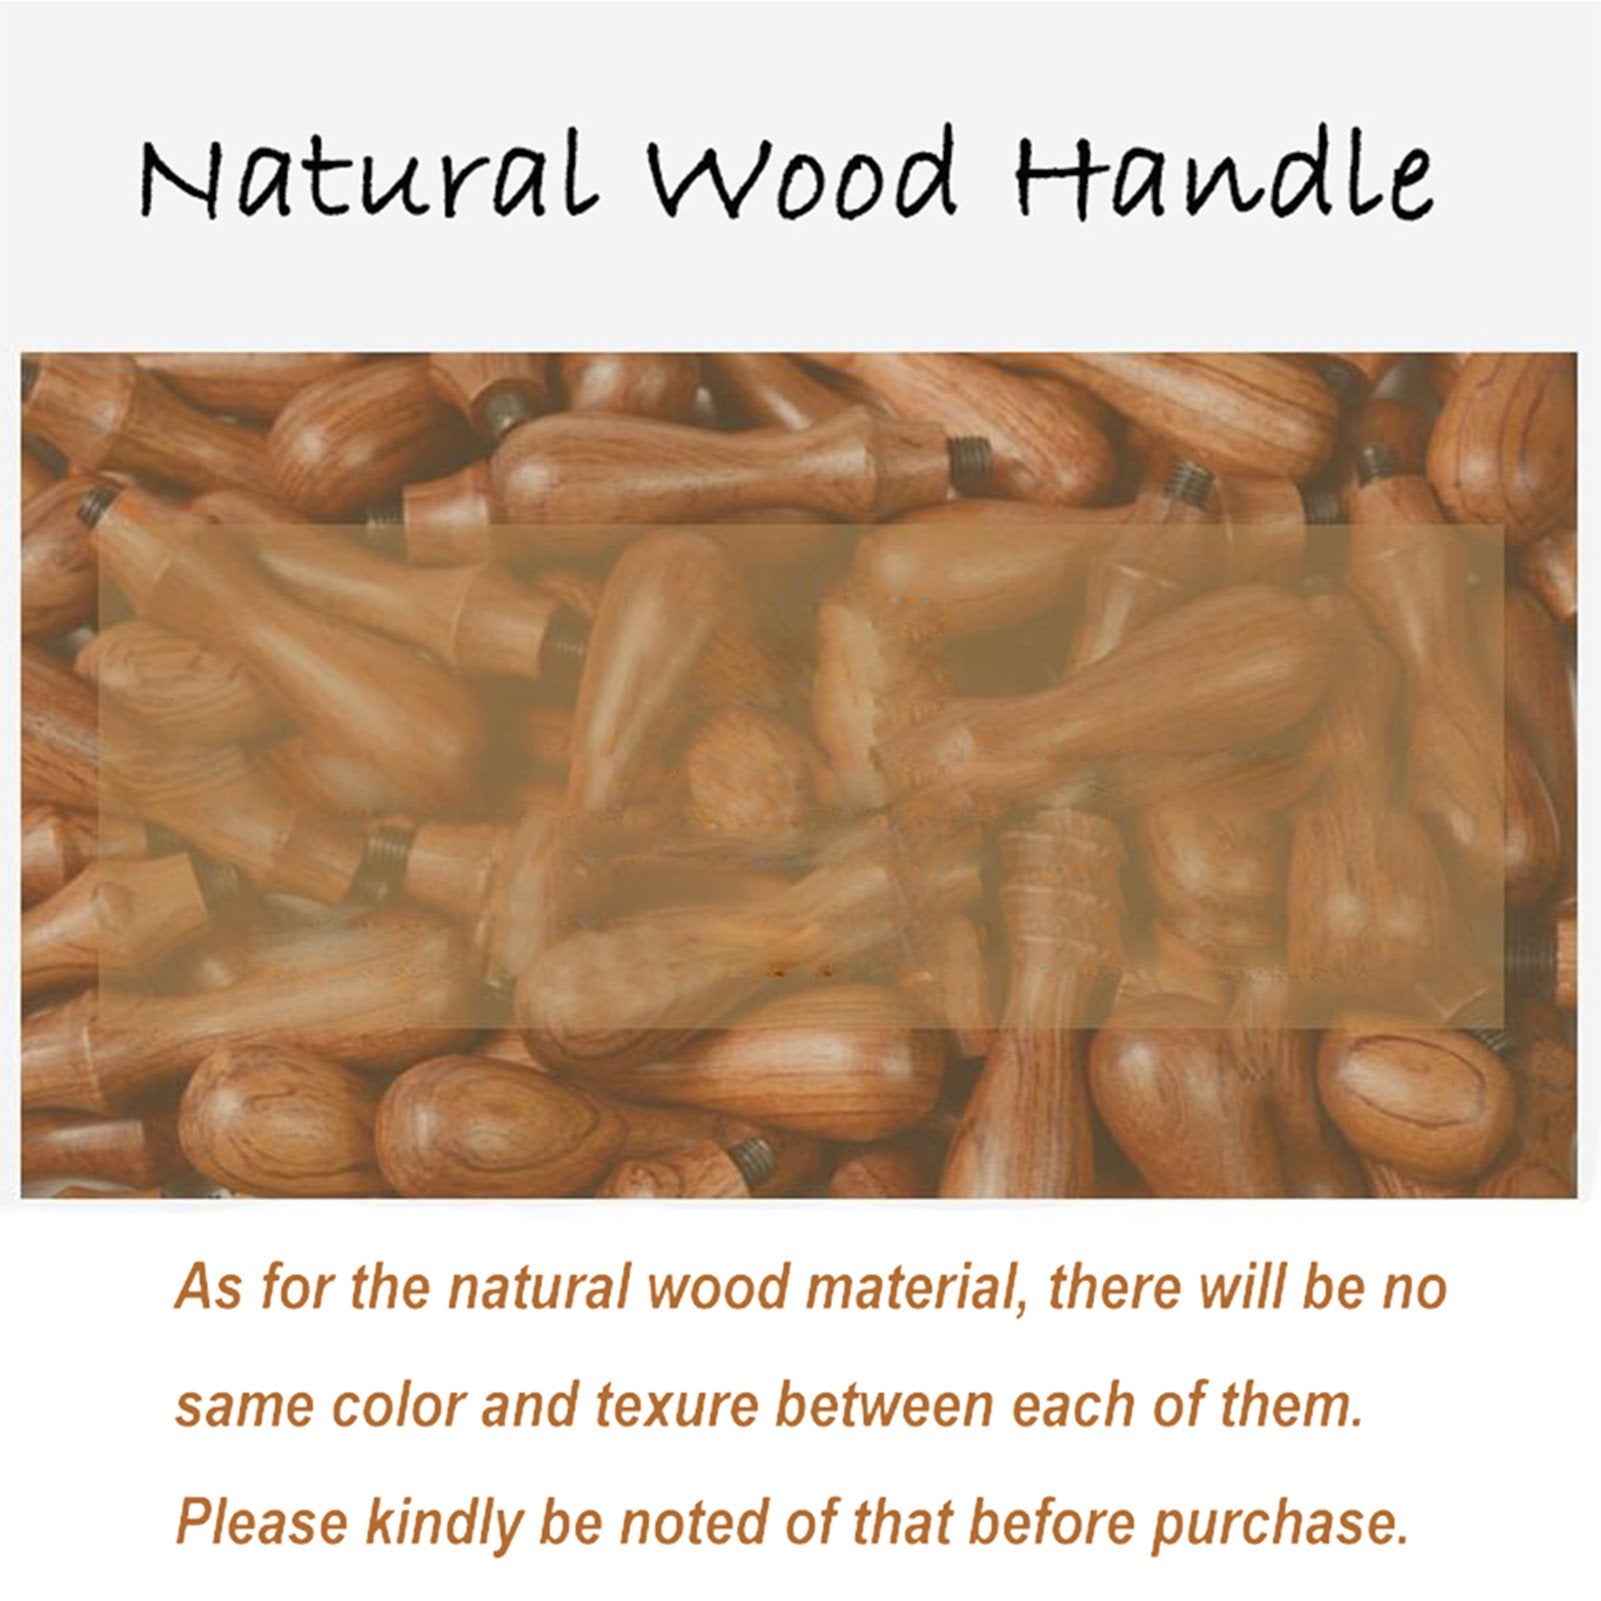 Tree Wood Handle Wax Seal Stamp